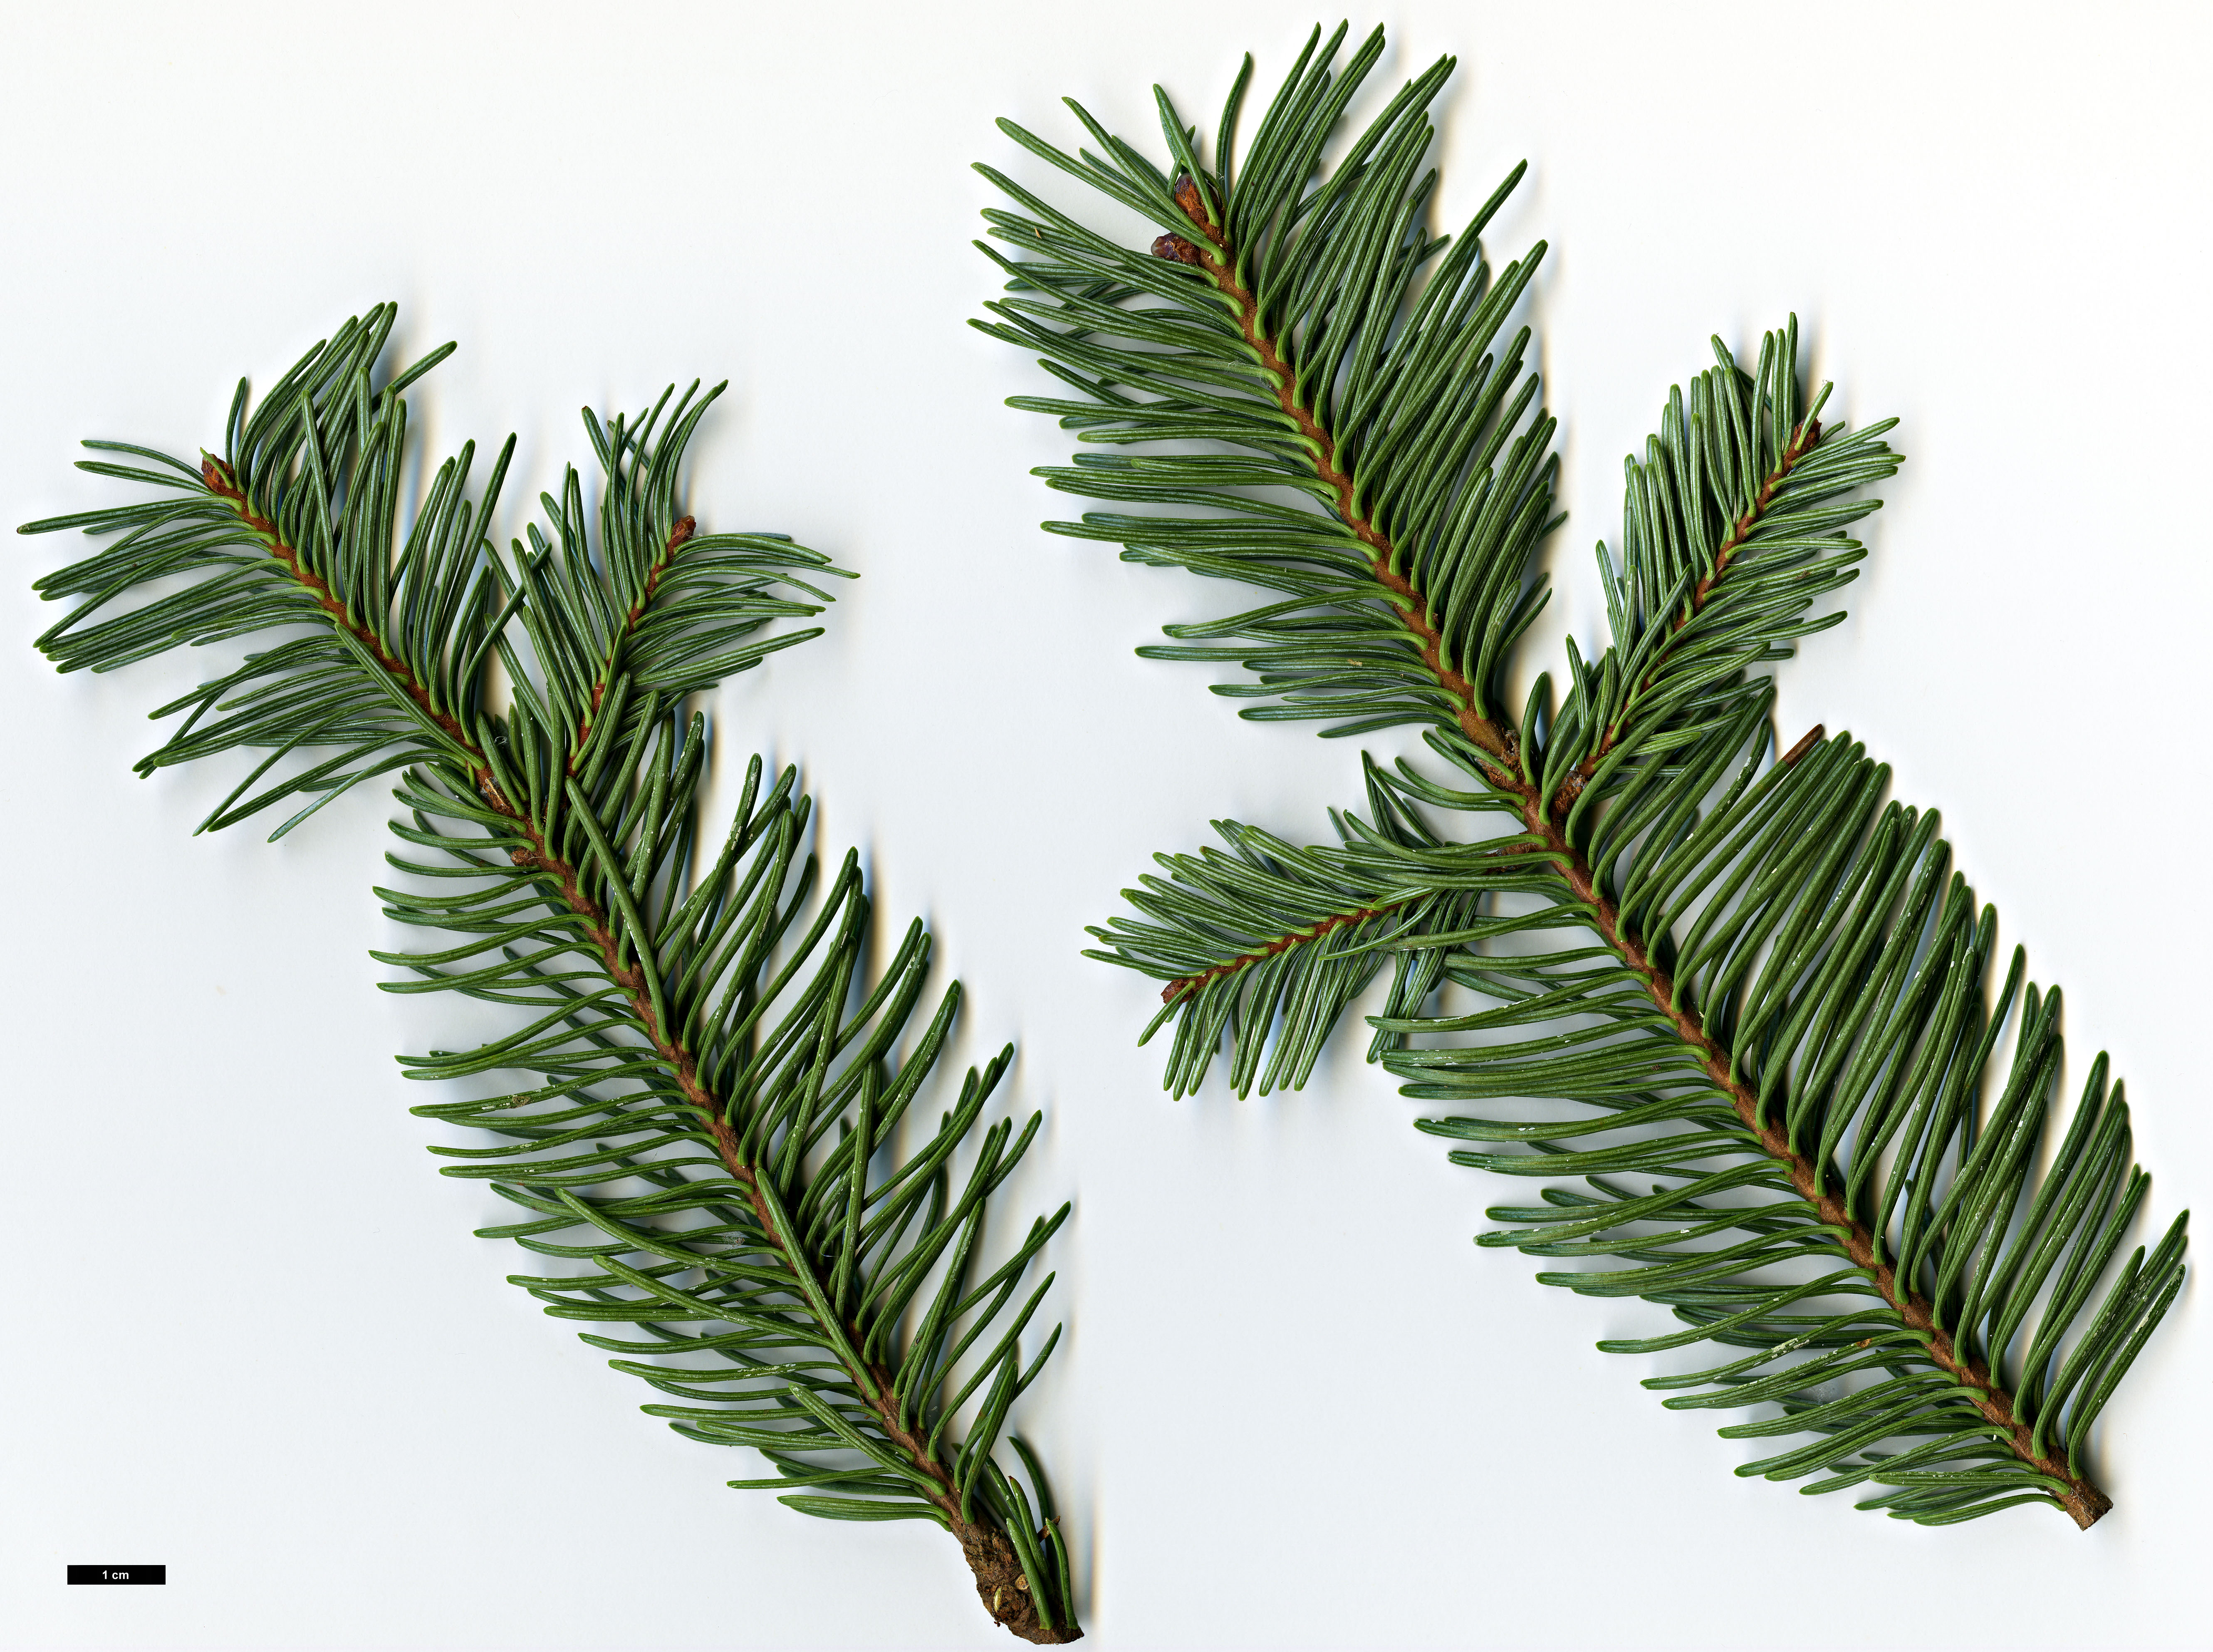 High resolution image: Family: Pinaceae - Genus: Abies - Taxon: magnifica - SpeciesSub: var. shastensis